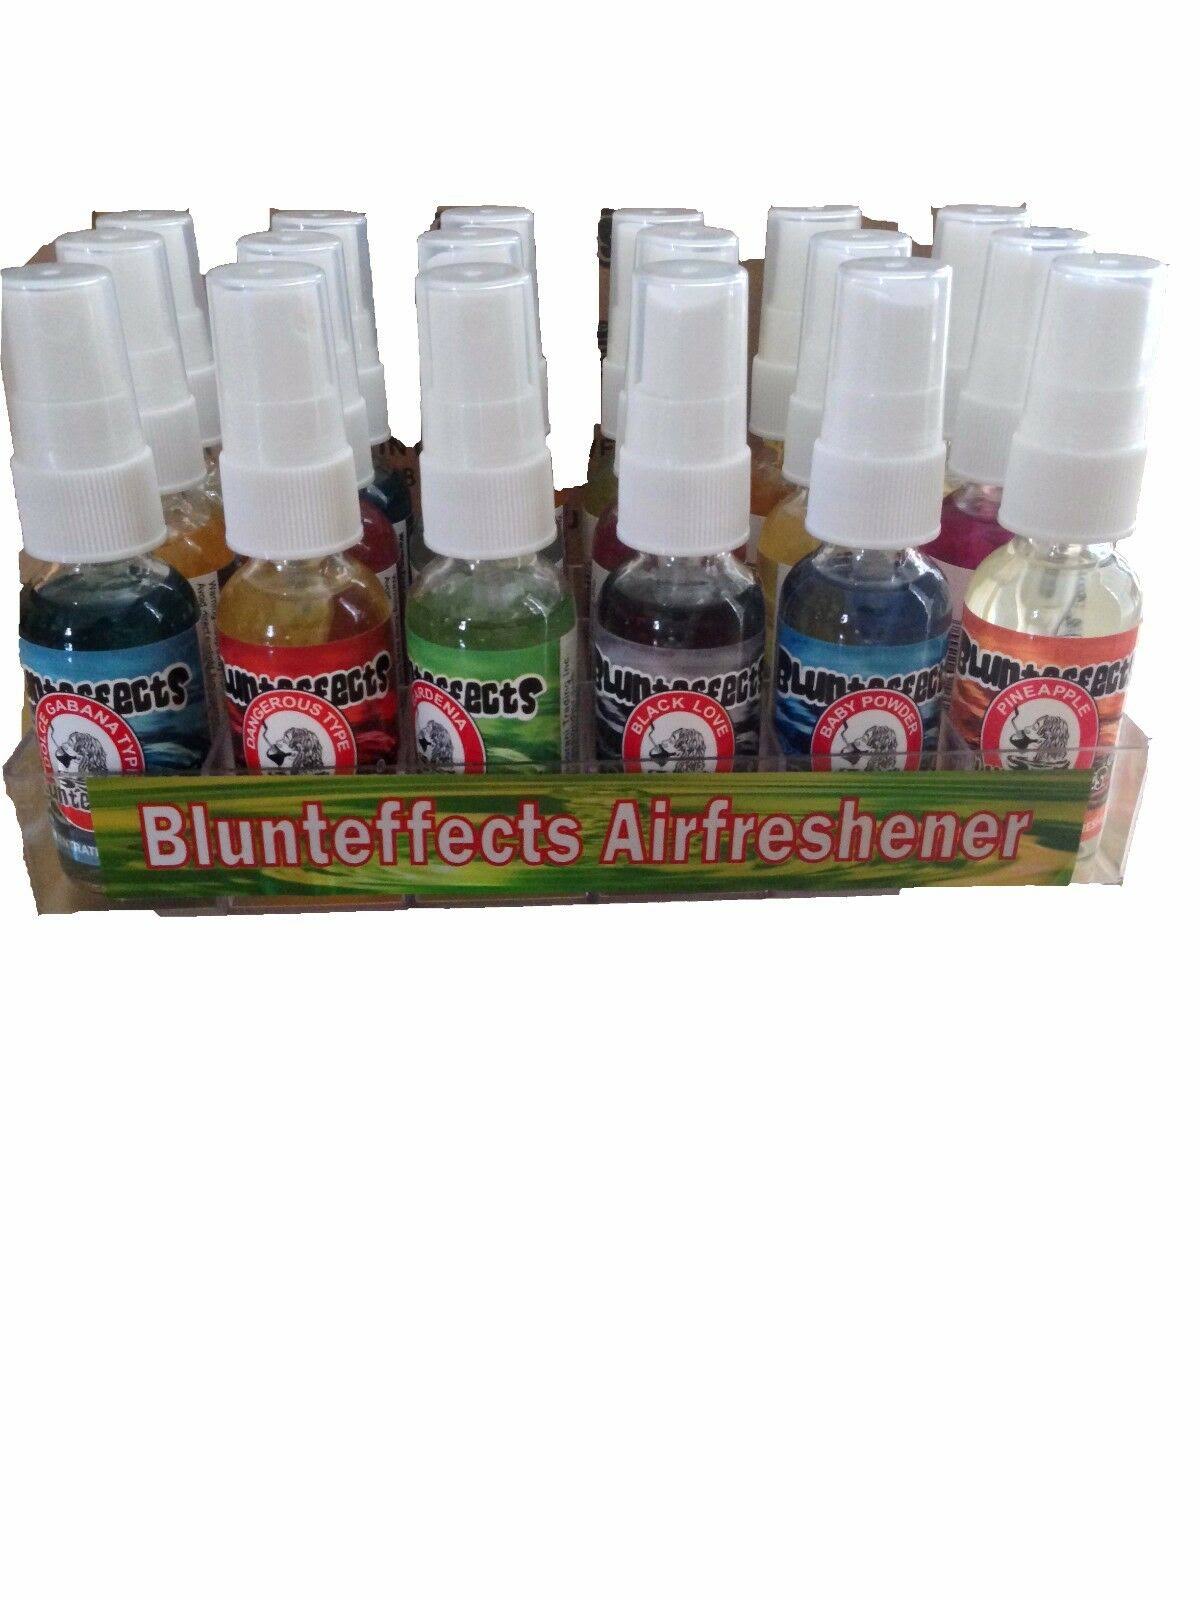 Blunteffects Air Freshener Display - 50 Count